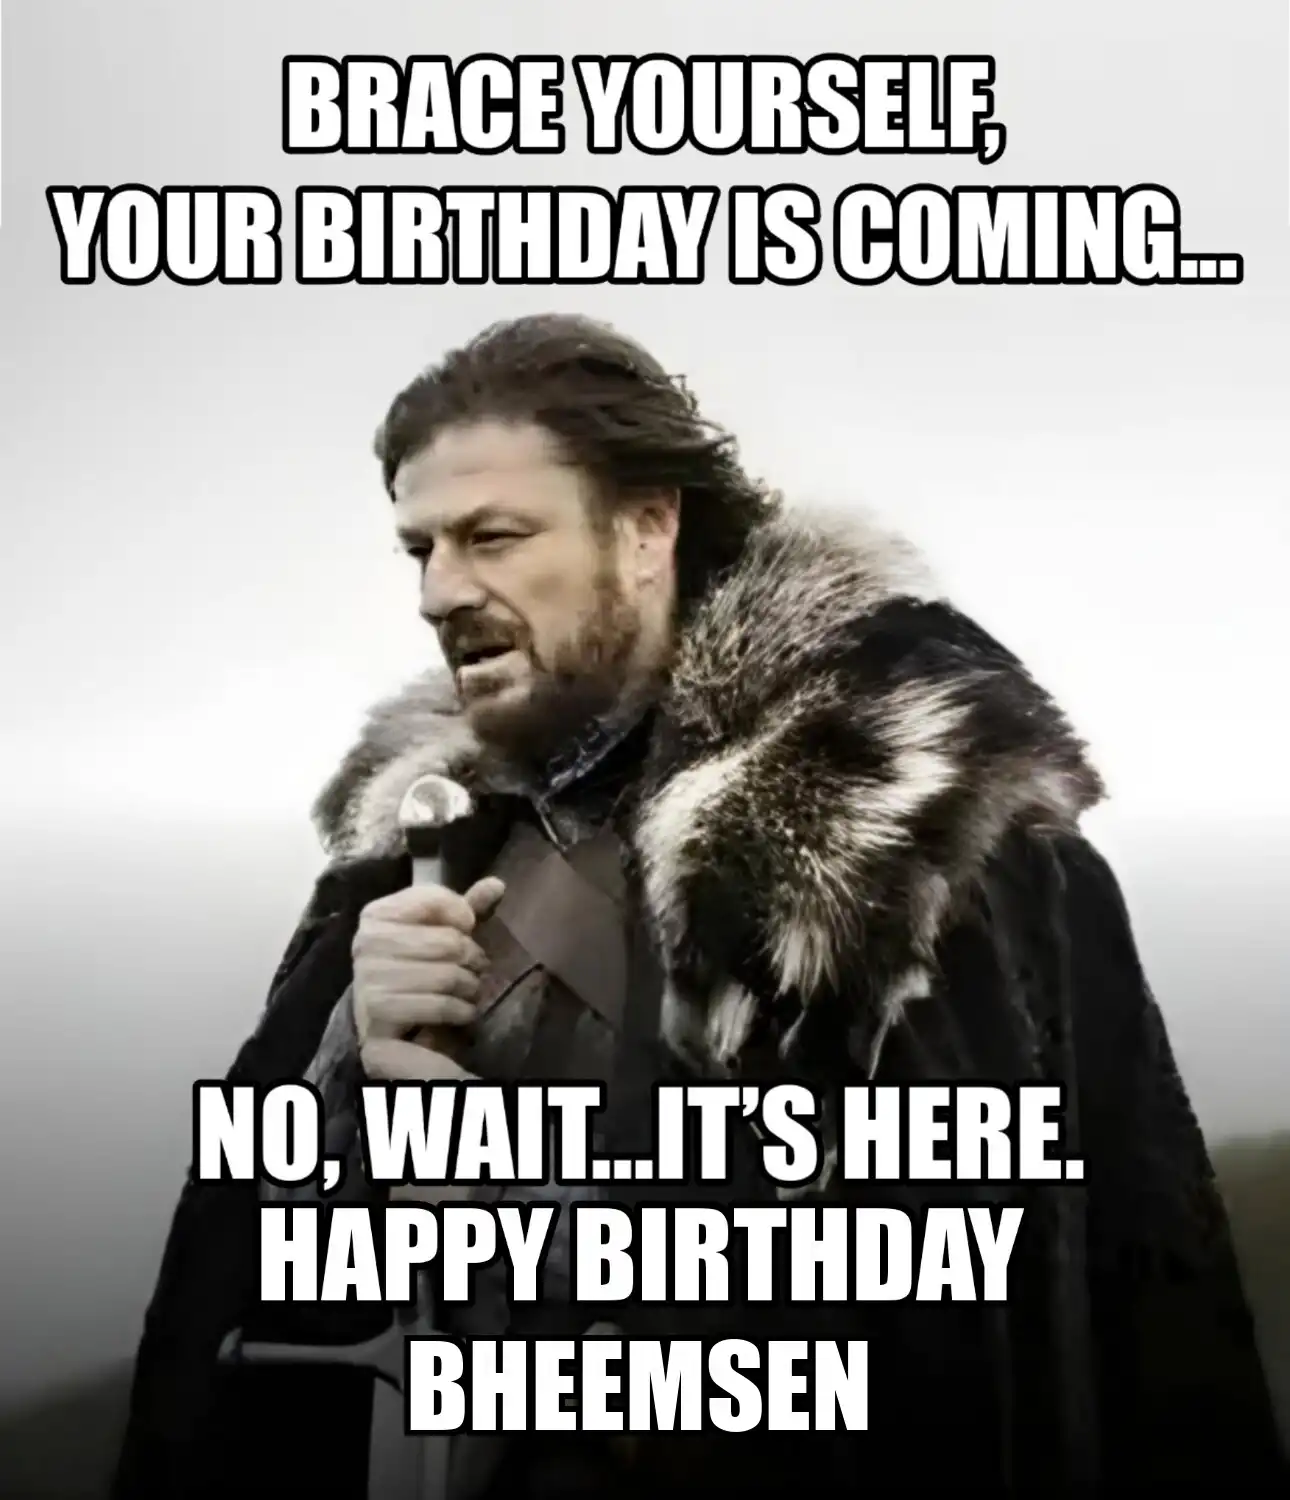 Happy Birthday Bheemsen Brace Yourself Your Birthday Is Coming Meme